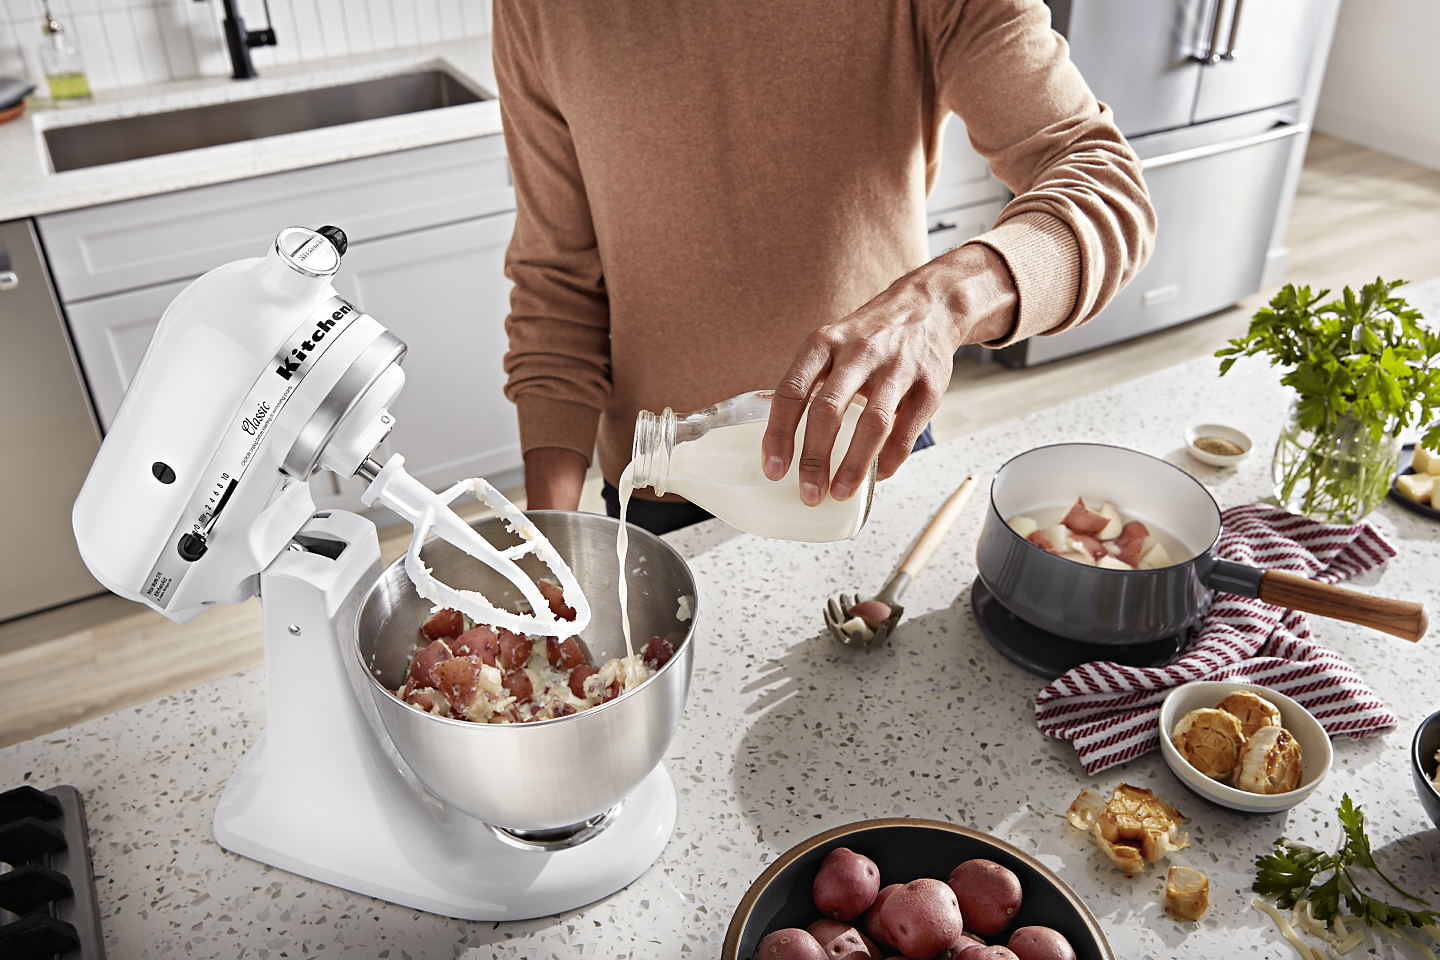 How to use a Kitchenaid mixer to make mashed potatoes - Quora